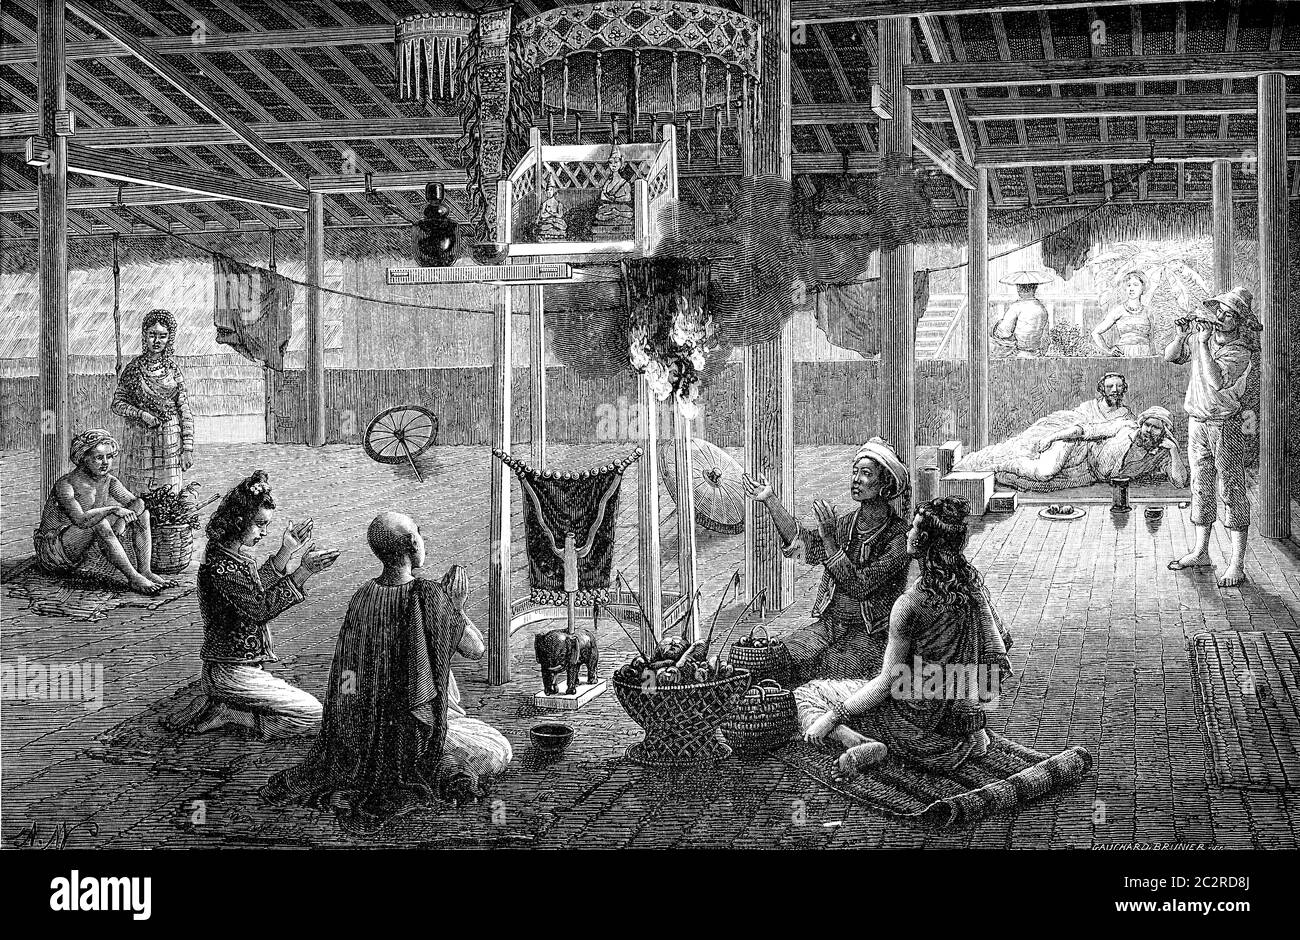 Im Inneren der Pagode Paleo, Vintage gravierte Illustration. Le Tour du Monde, Travel Journal, (1872). Stockfoto